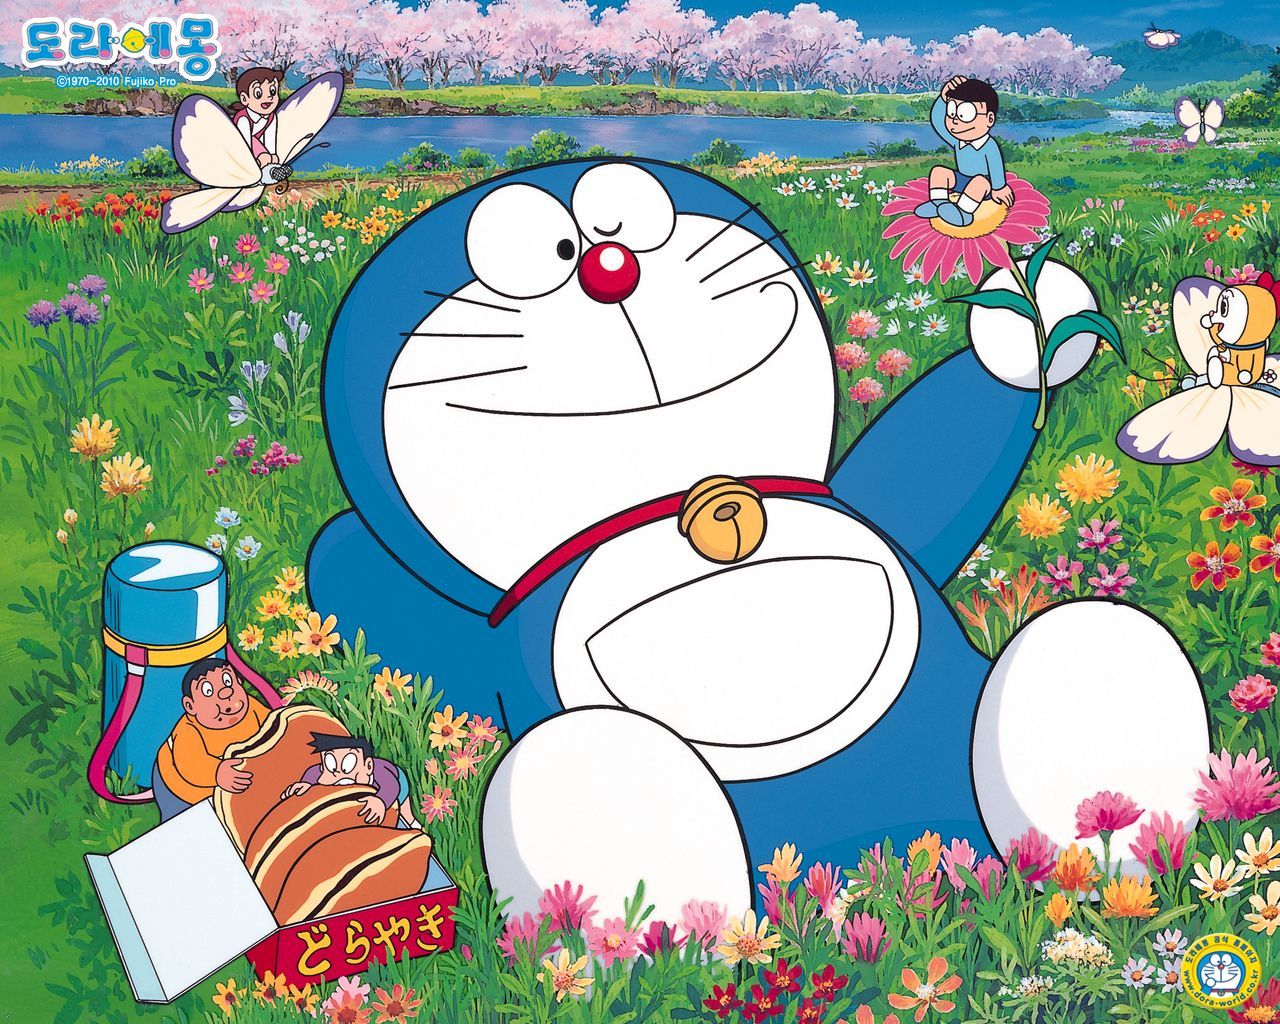 doraemon Computer Wallpaper, Desktop Backgroundx1024. Doraemon wallpaper, Android wallpaper, Cartoon wallpaper hd